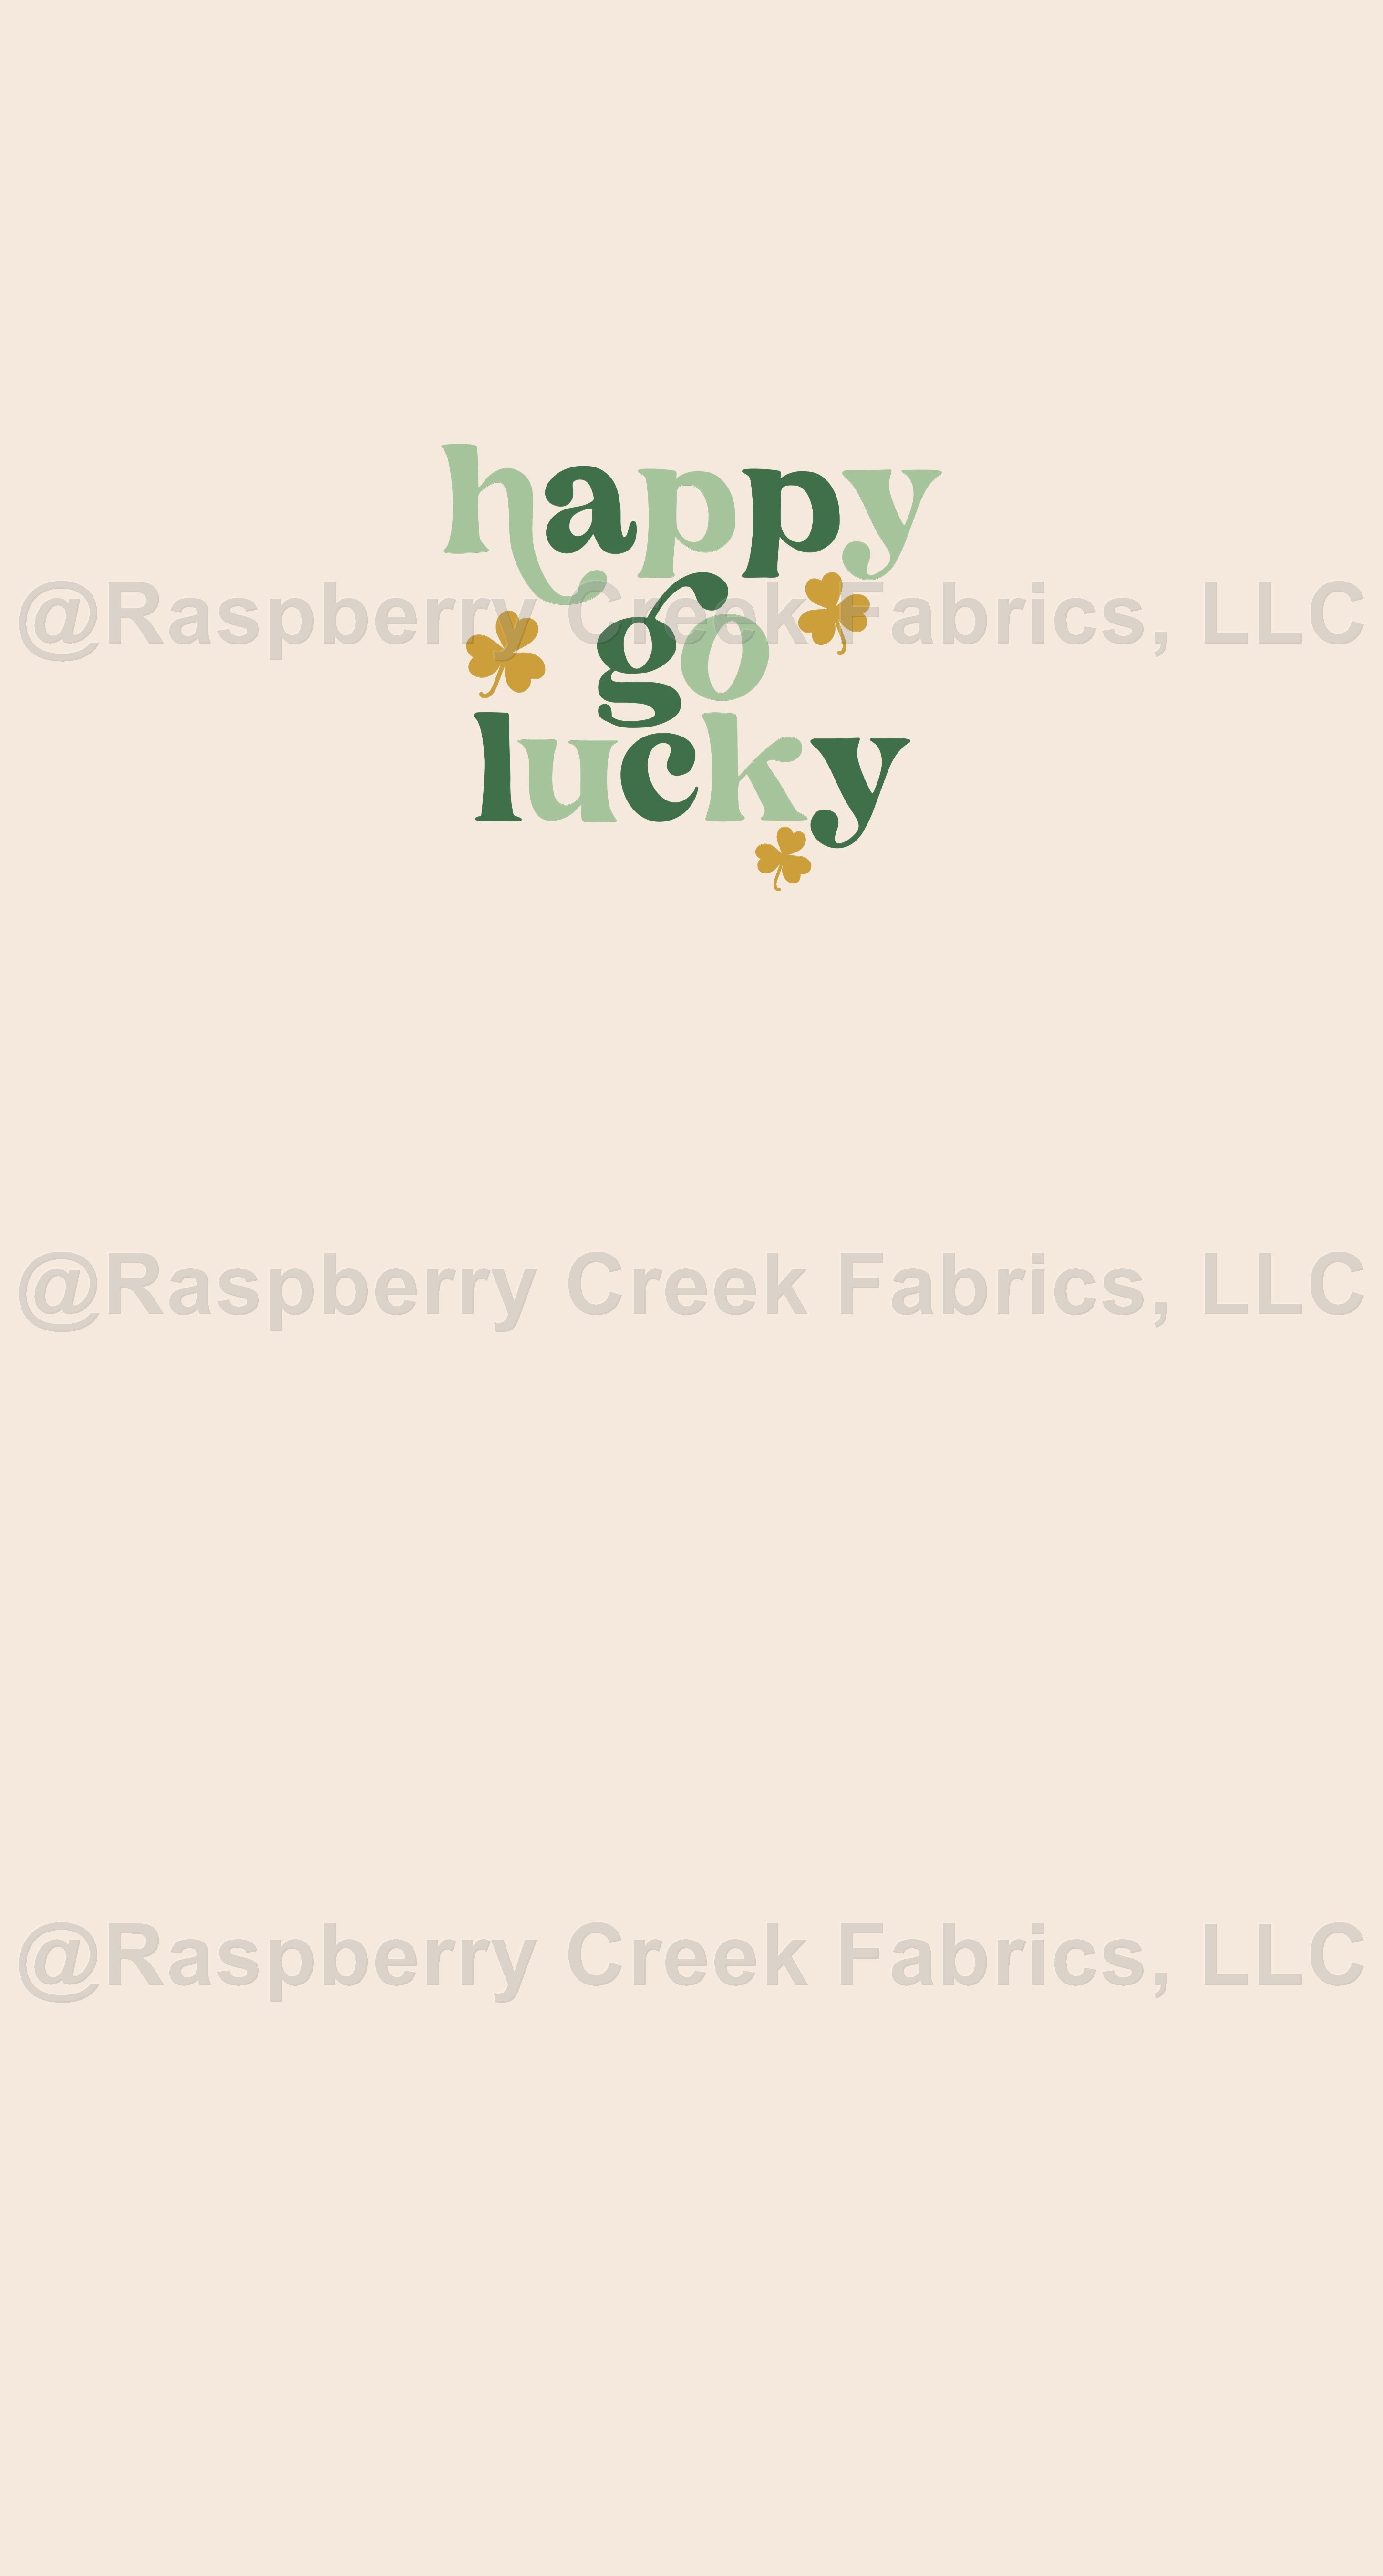 Happy Go Lucky Panel | Chasing Rainbows Fabric, Raspberry Creek Fabrics, watermarked